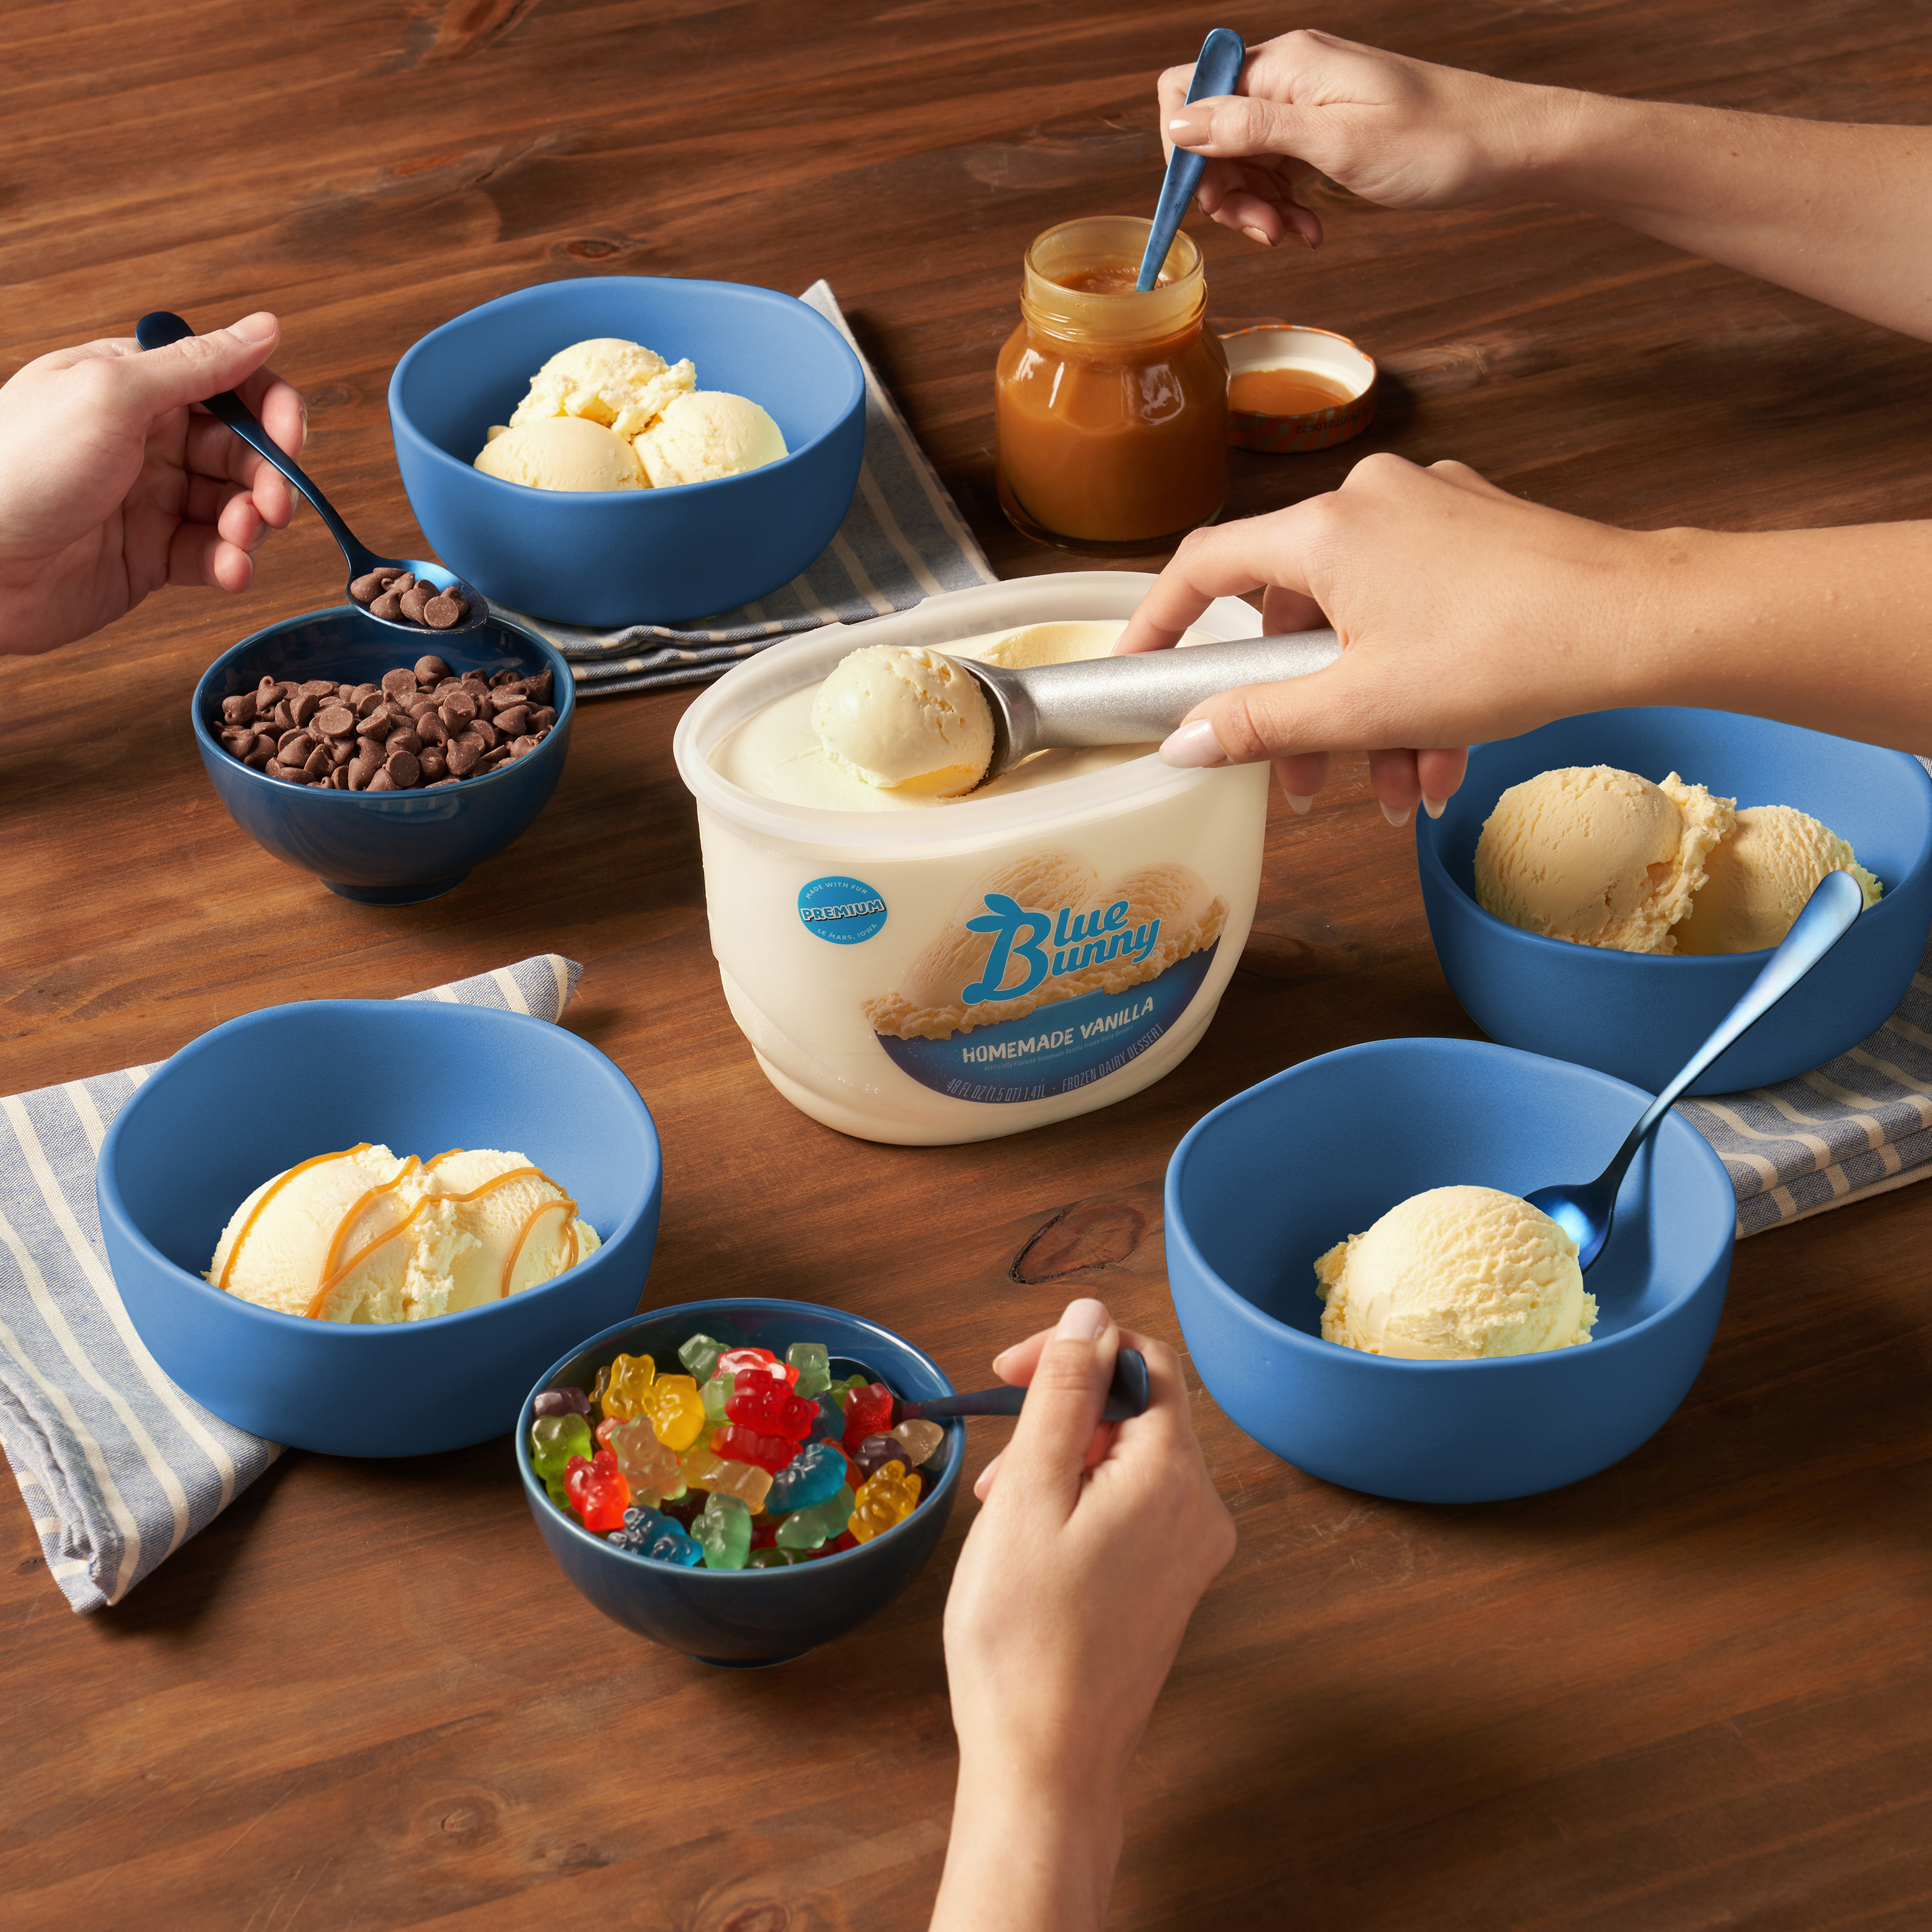 Blue Bunny Homemade Vanilla Frozen Dessert, 48 fl oz - image 4 of 9